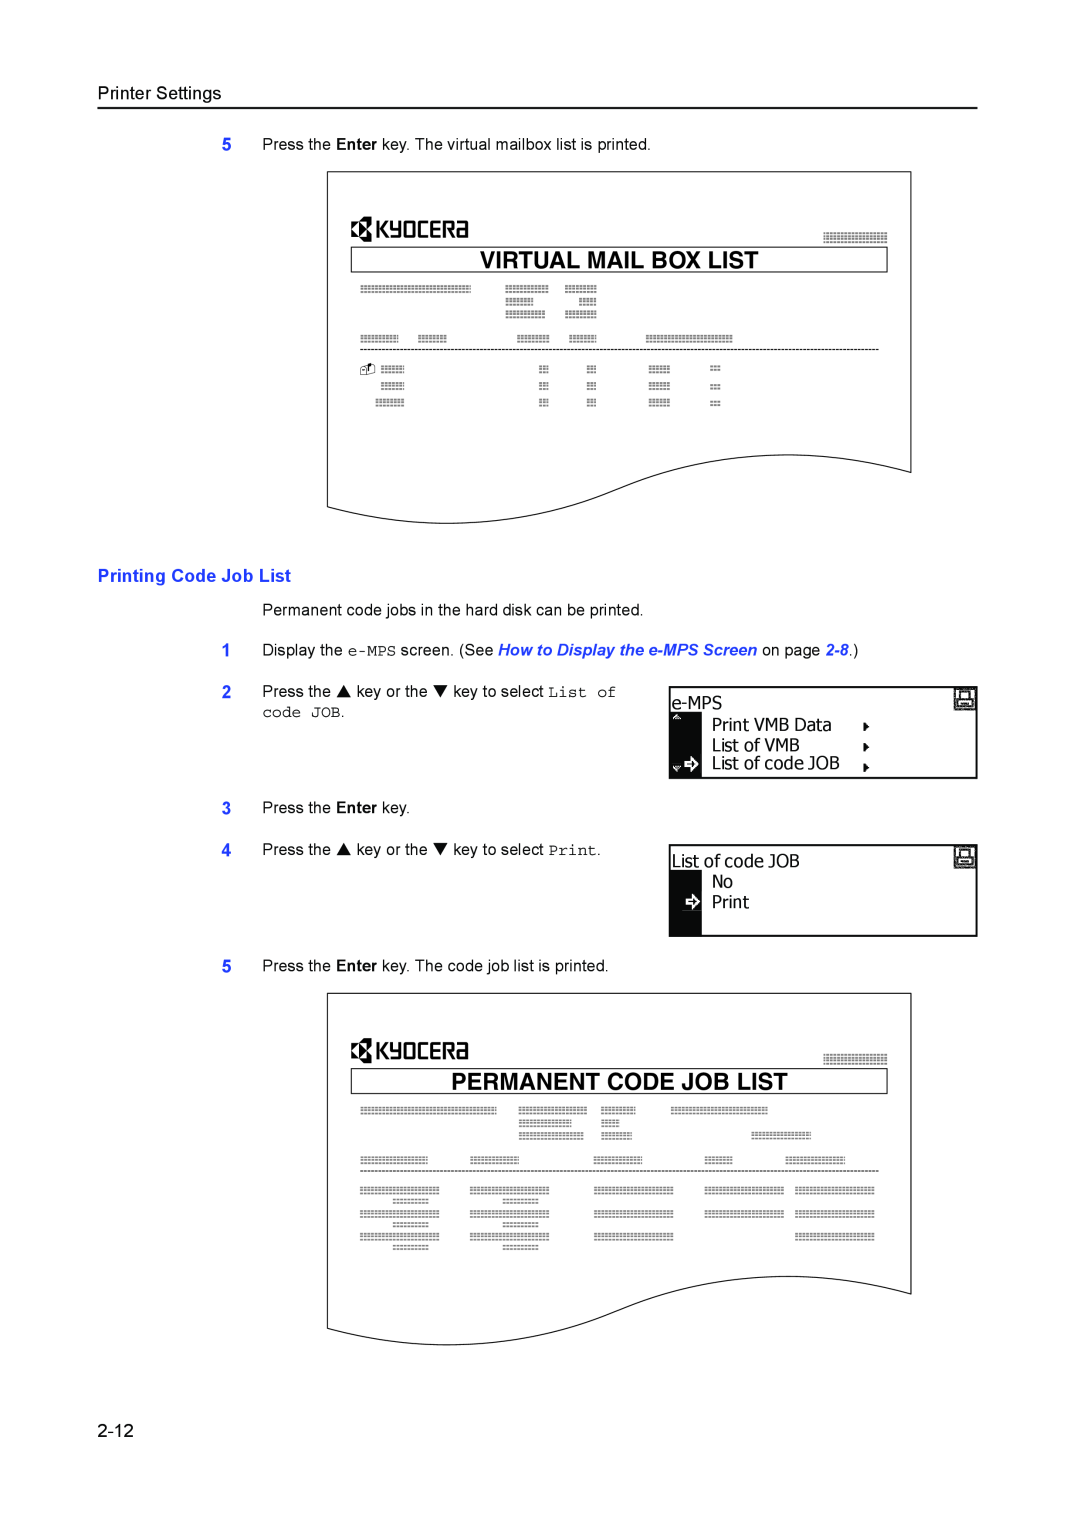 Kyocera 1650, 2050, 2550 Virtual Mail Box List, Permanent Code Job List, Printing Code Job List, 2-12, Printer Settings 